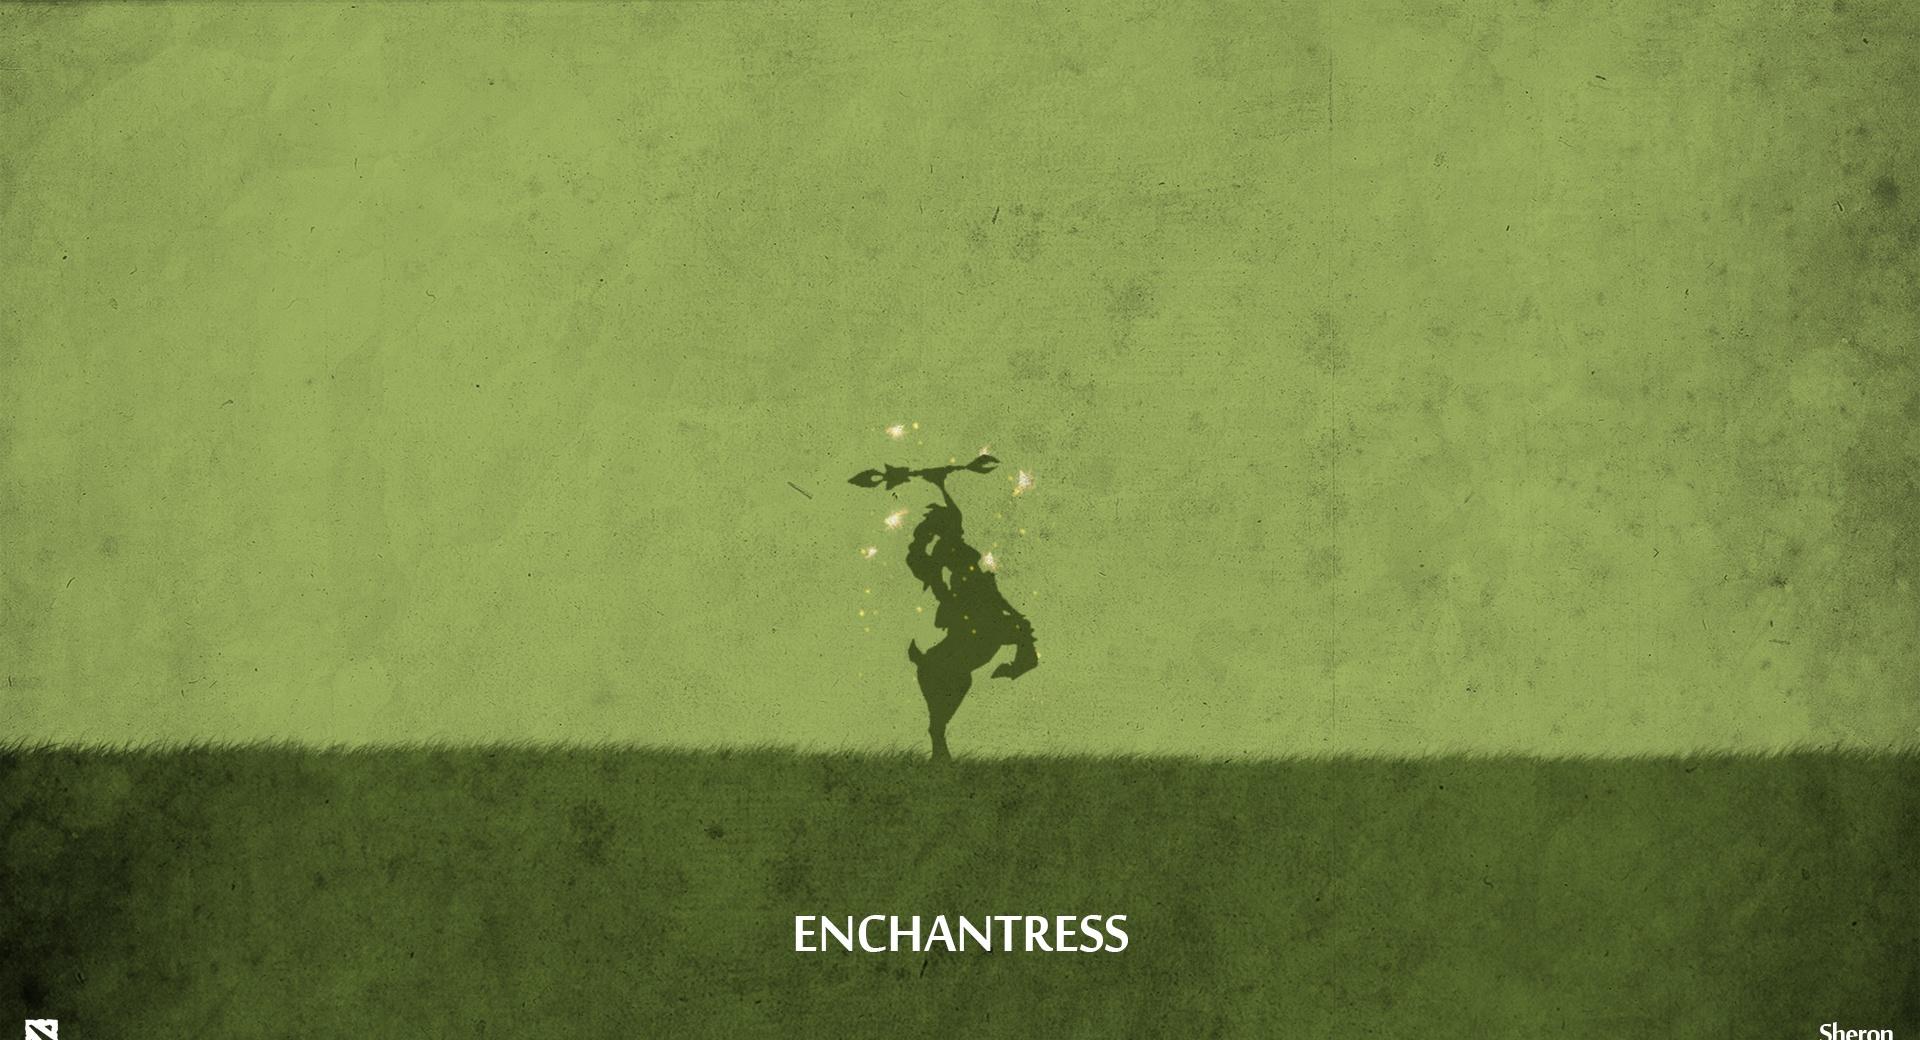 Enchantress - DotA 2 at 1024 x 768 size wallpapers HD quality